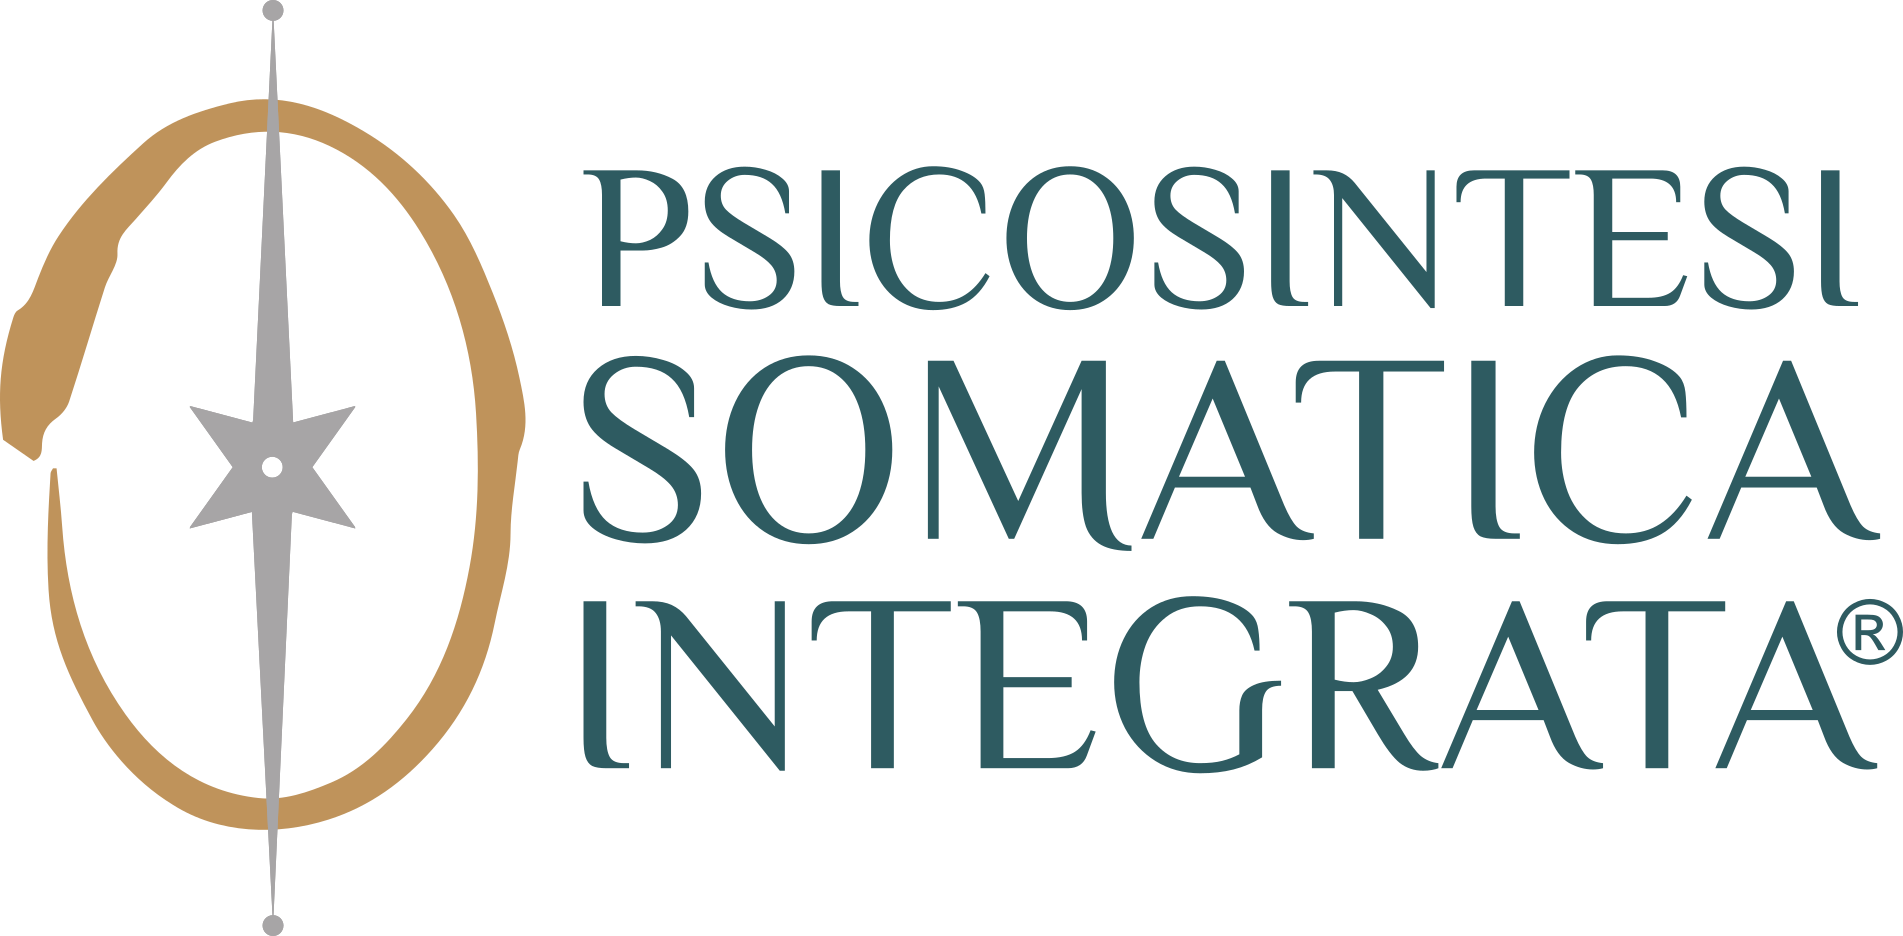 Psicosintesi Somatica Integrata Logo